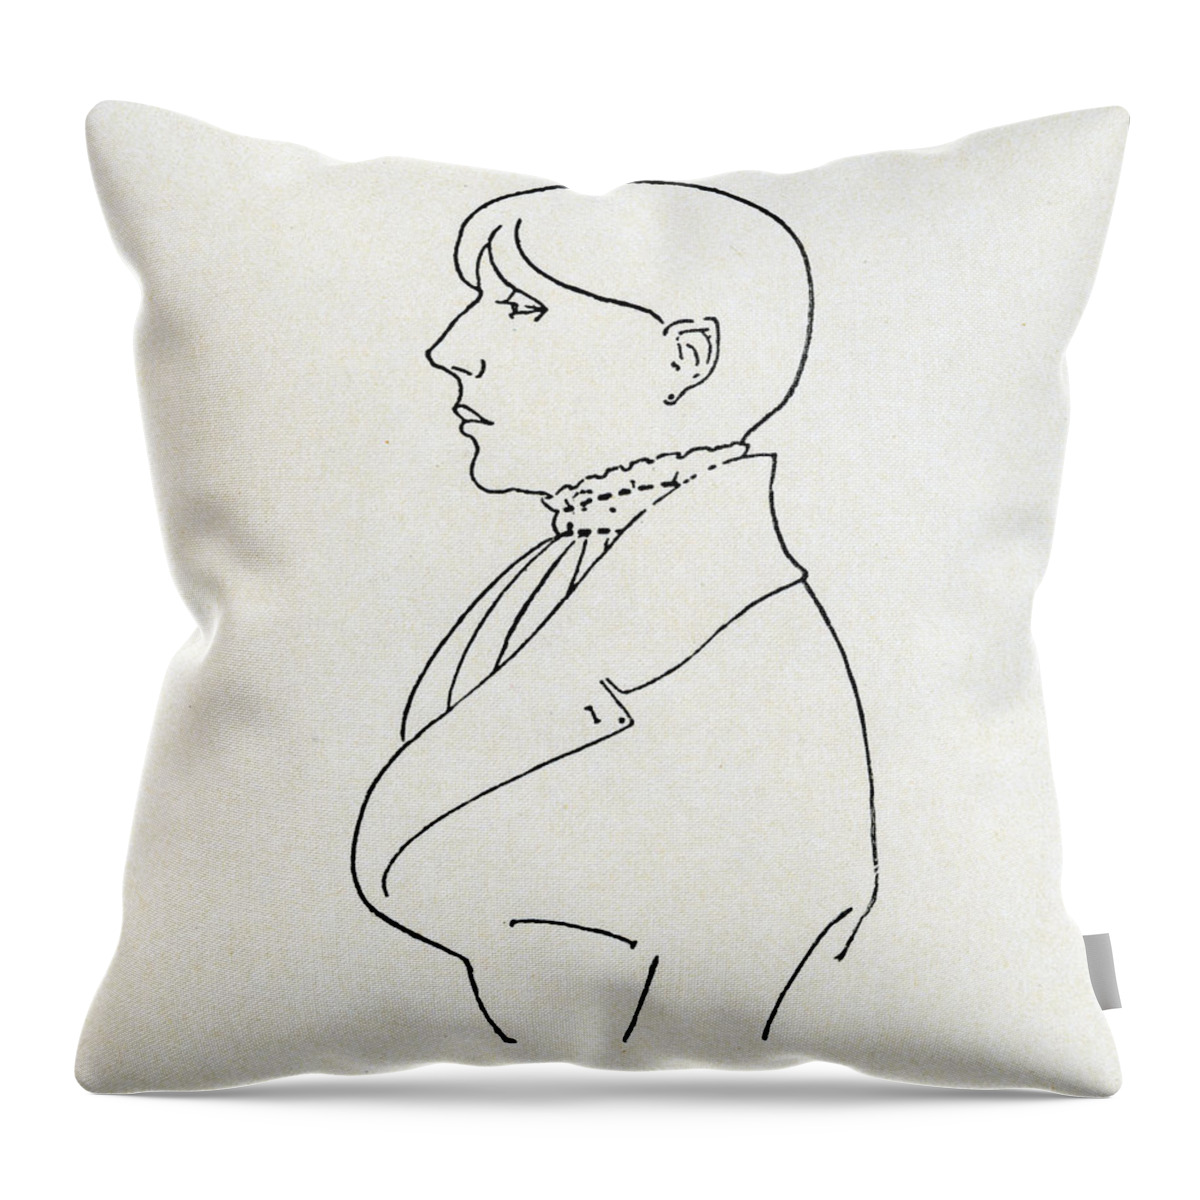 Aubrey Beardsley Throw Pillow featuring the drawing Self Portrait by Aubrey Beardsley